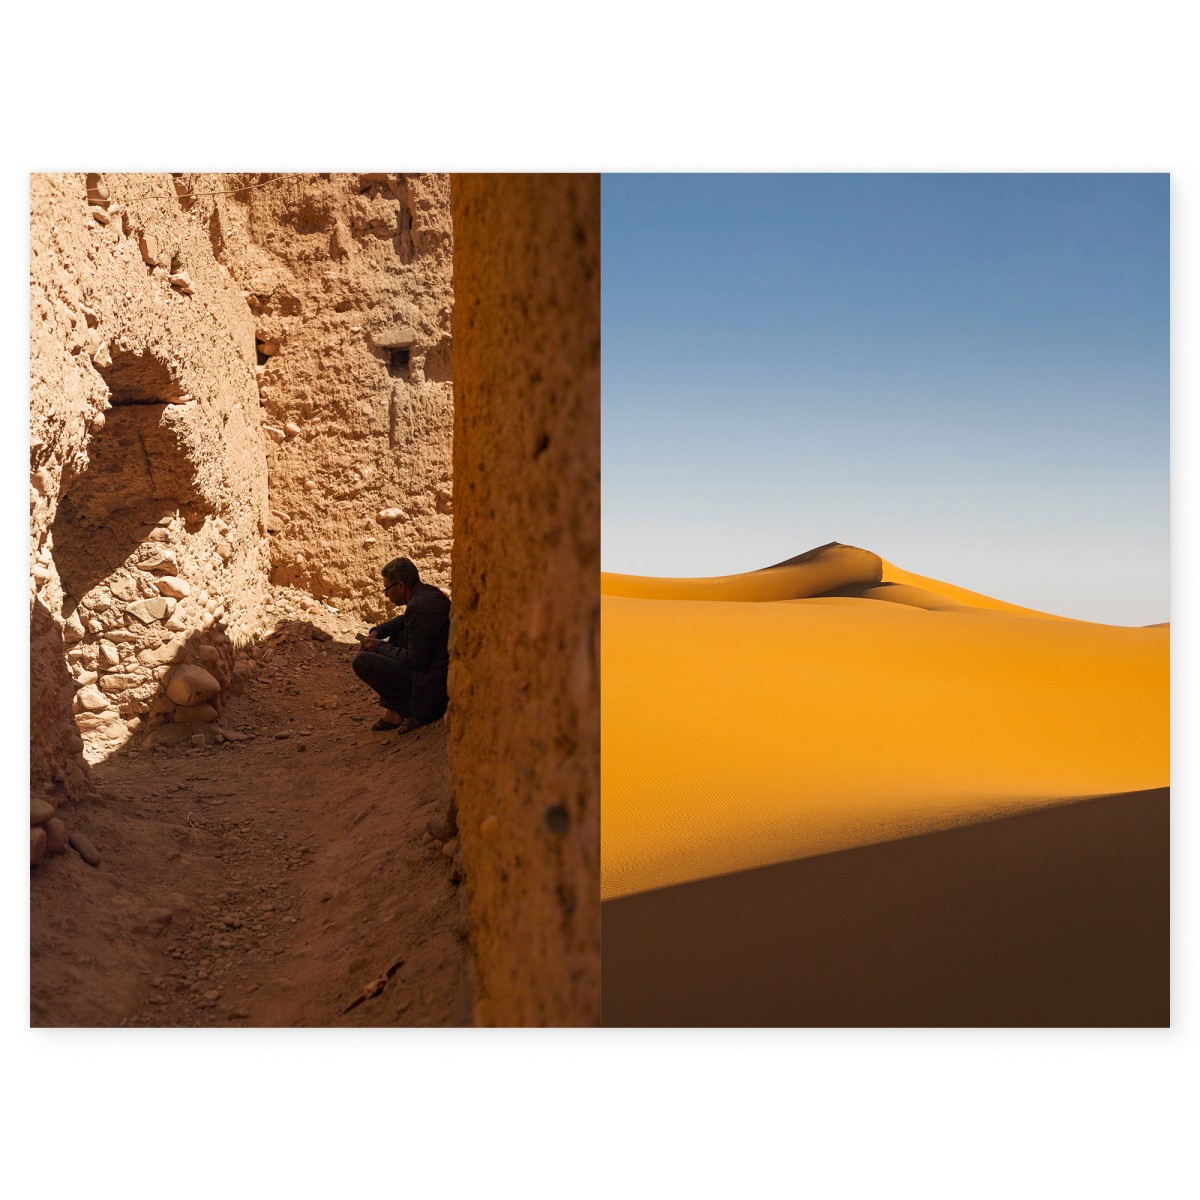 Morocco - David Diez